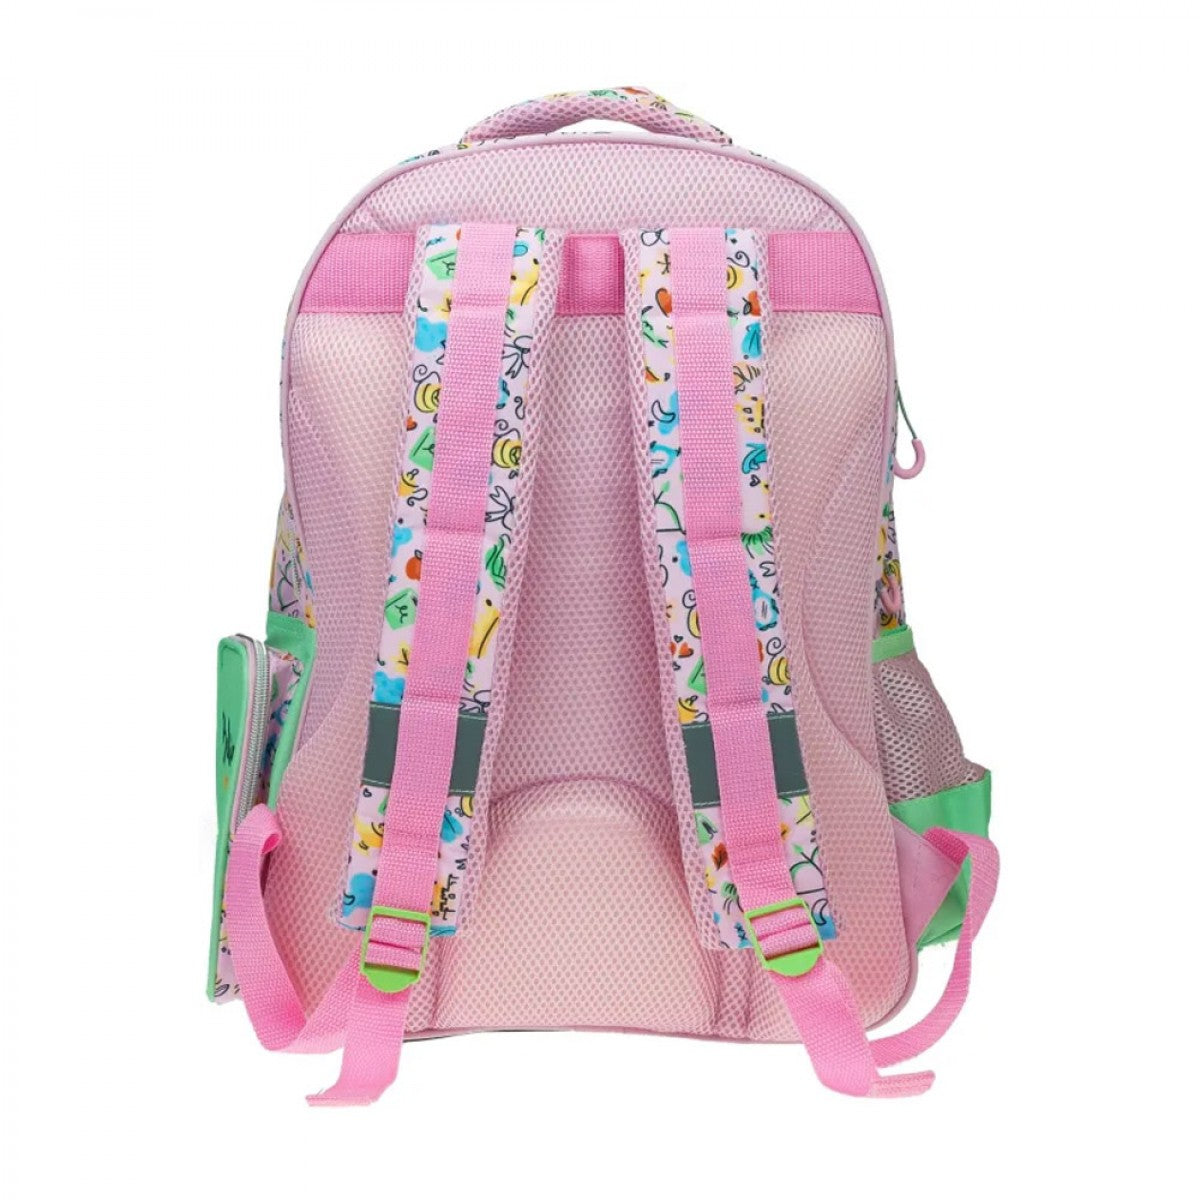 Disney Princess Backpack 3 Zip Fit A4